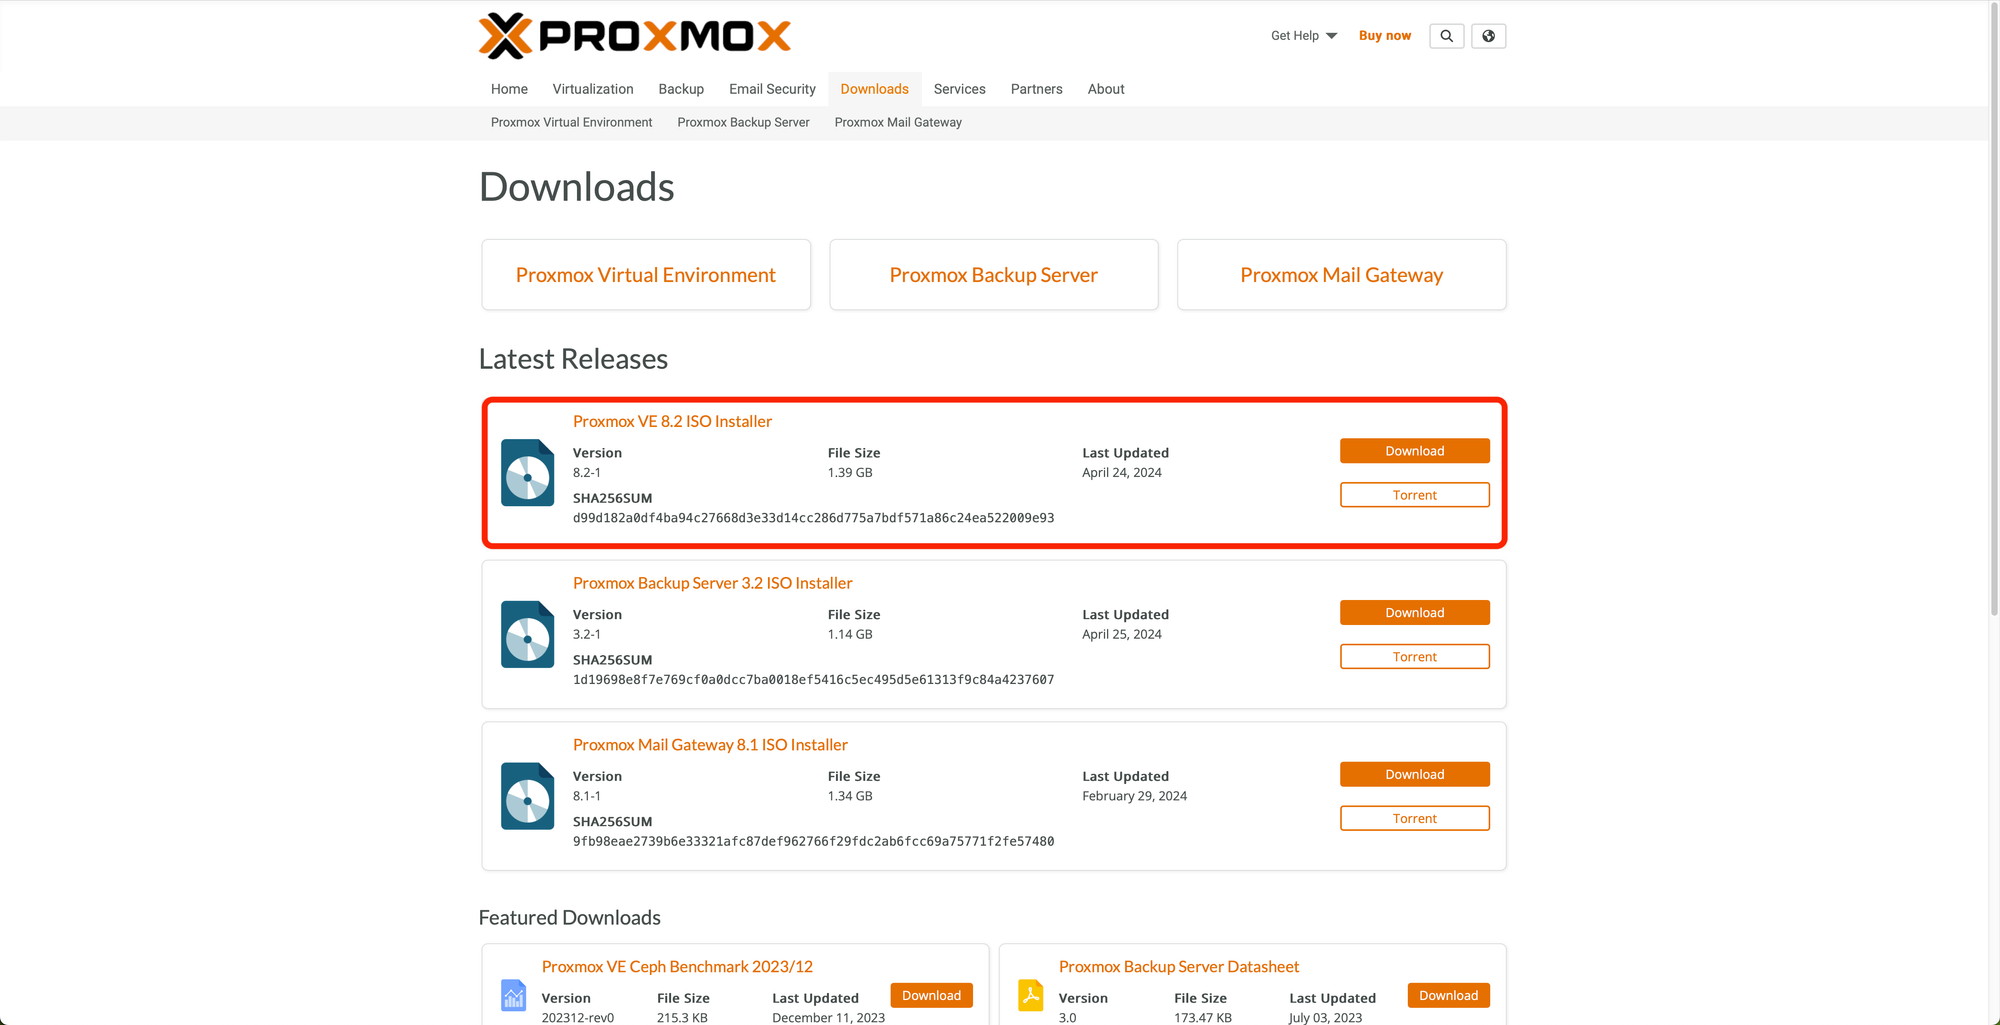 ventana de descarga de la version de Proxmox ve